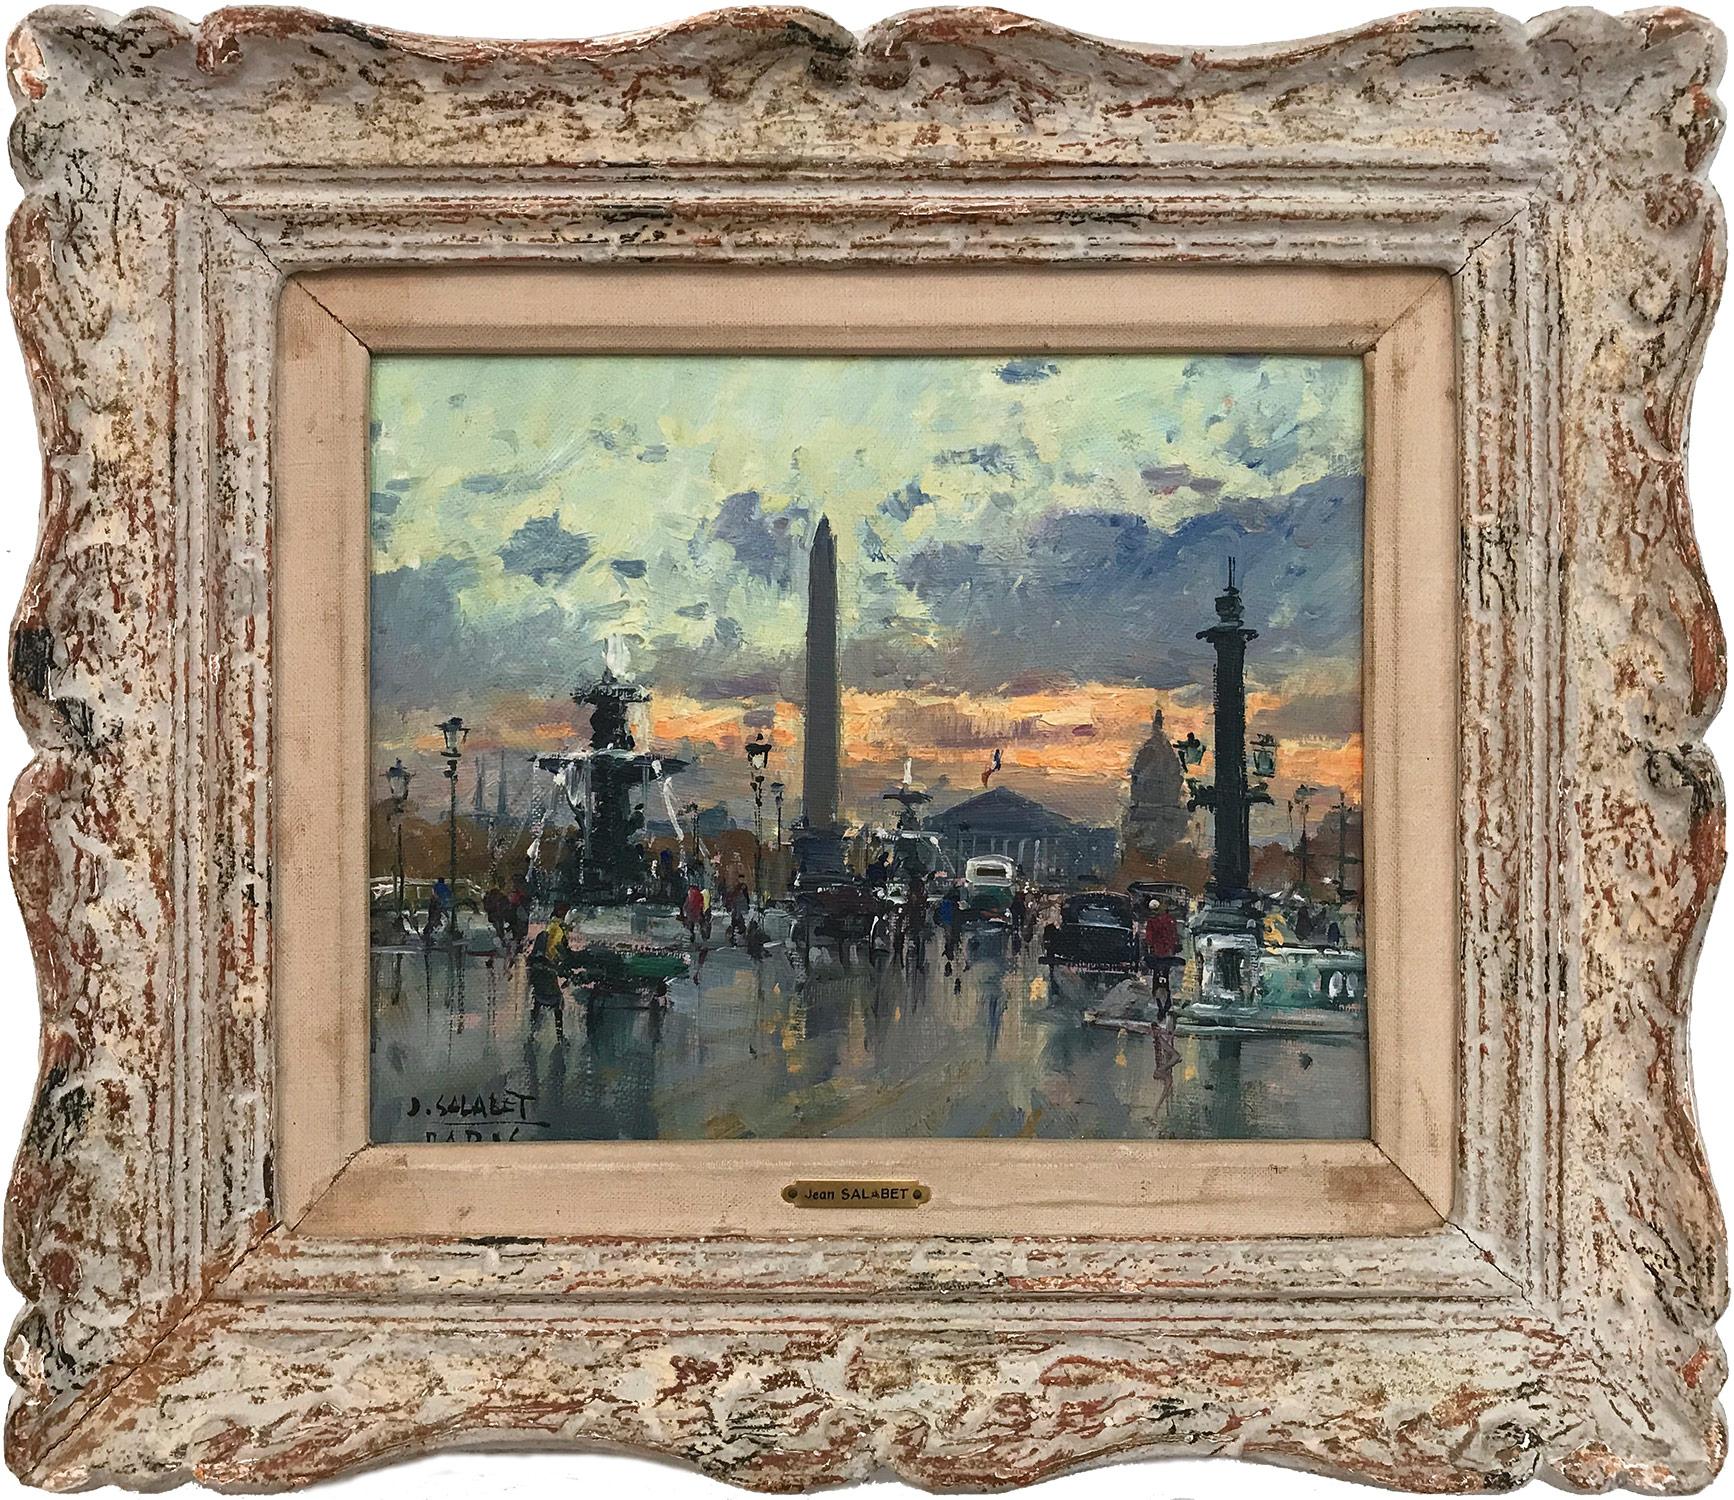 Jean Salabet Figurative Painting - "Place de la Concord" Post-Impressionist Parisian Street Scene Oil on Canvas